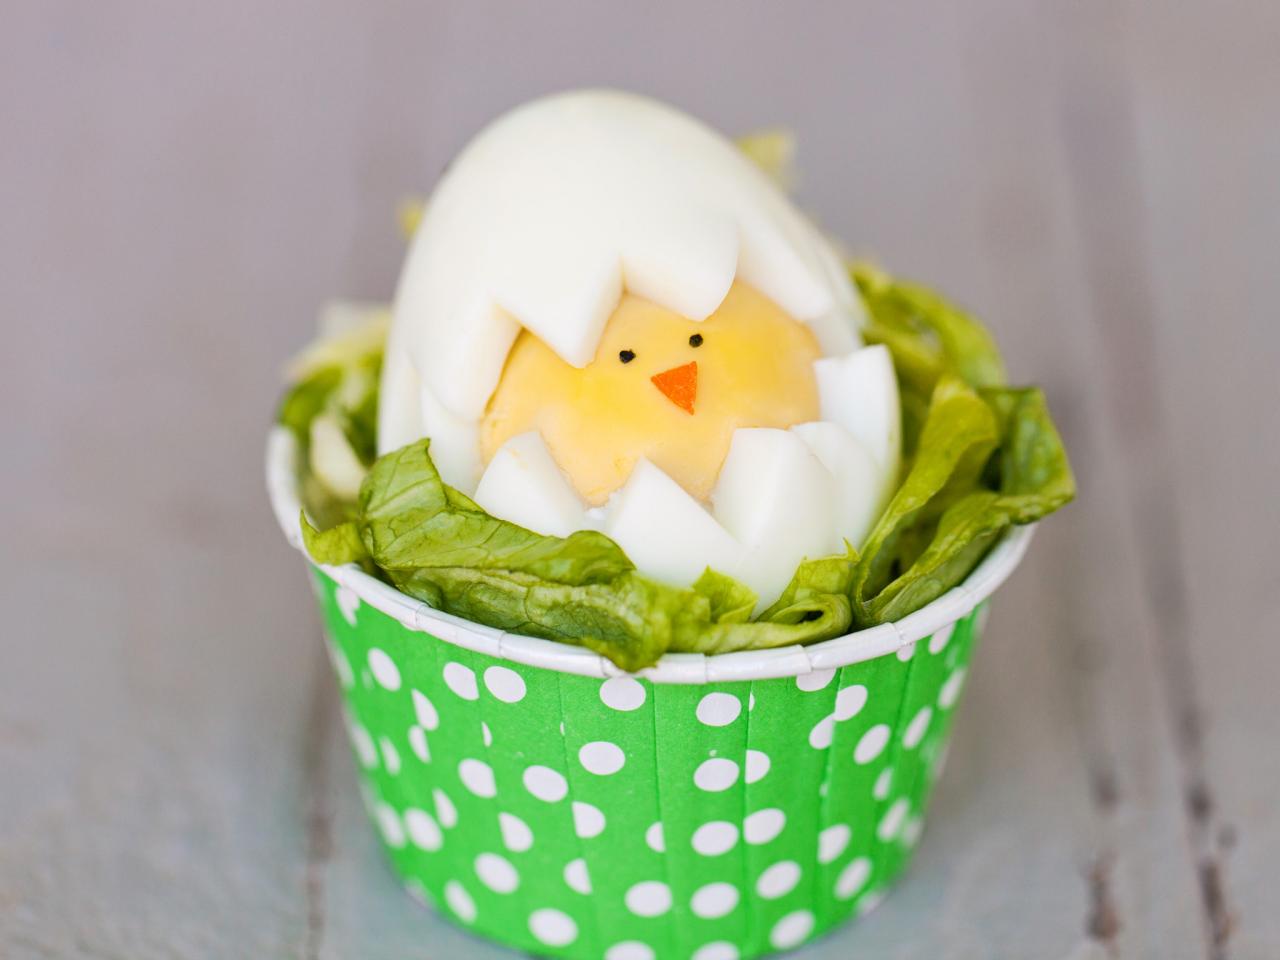 Original_Kim-Stoegbauer-Easter-Egg-Decorating-Party-Hatching-Chick-Egg-Beauty_s4x3.jpg.rend.hgtvcom.1280.960.jpeg